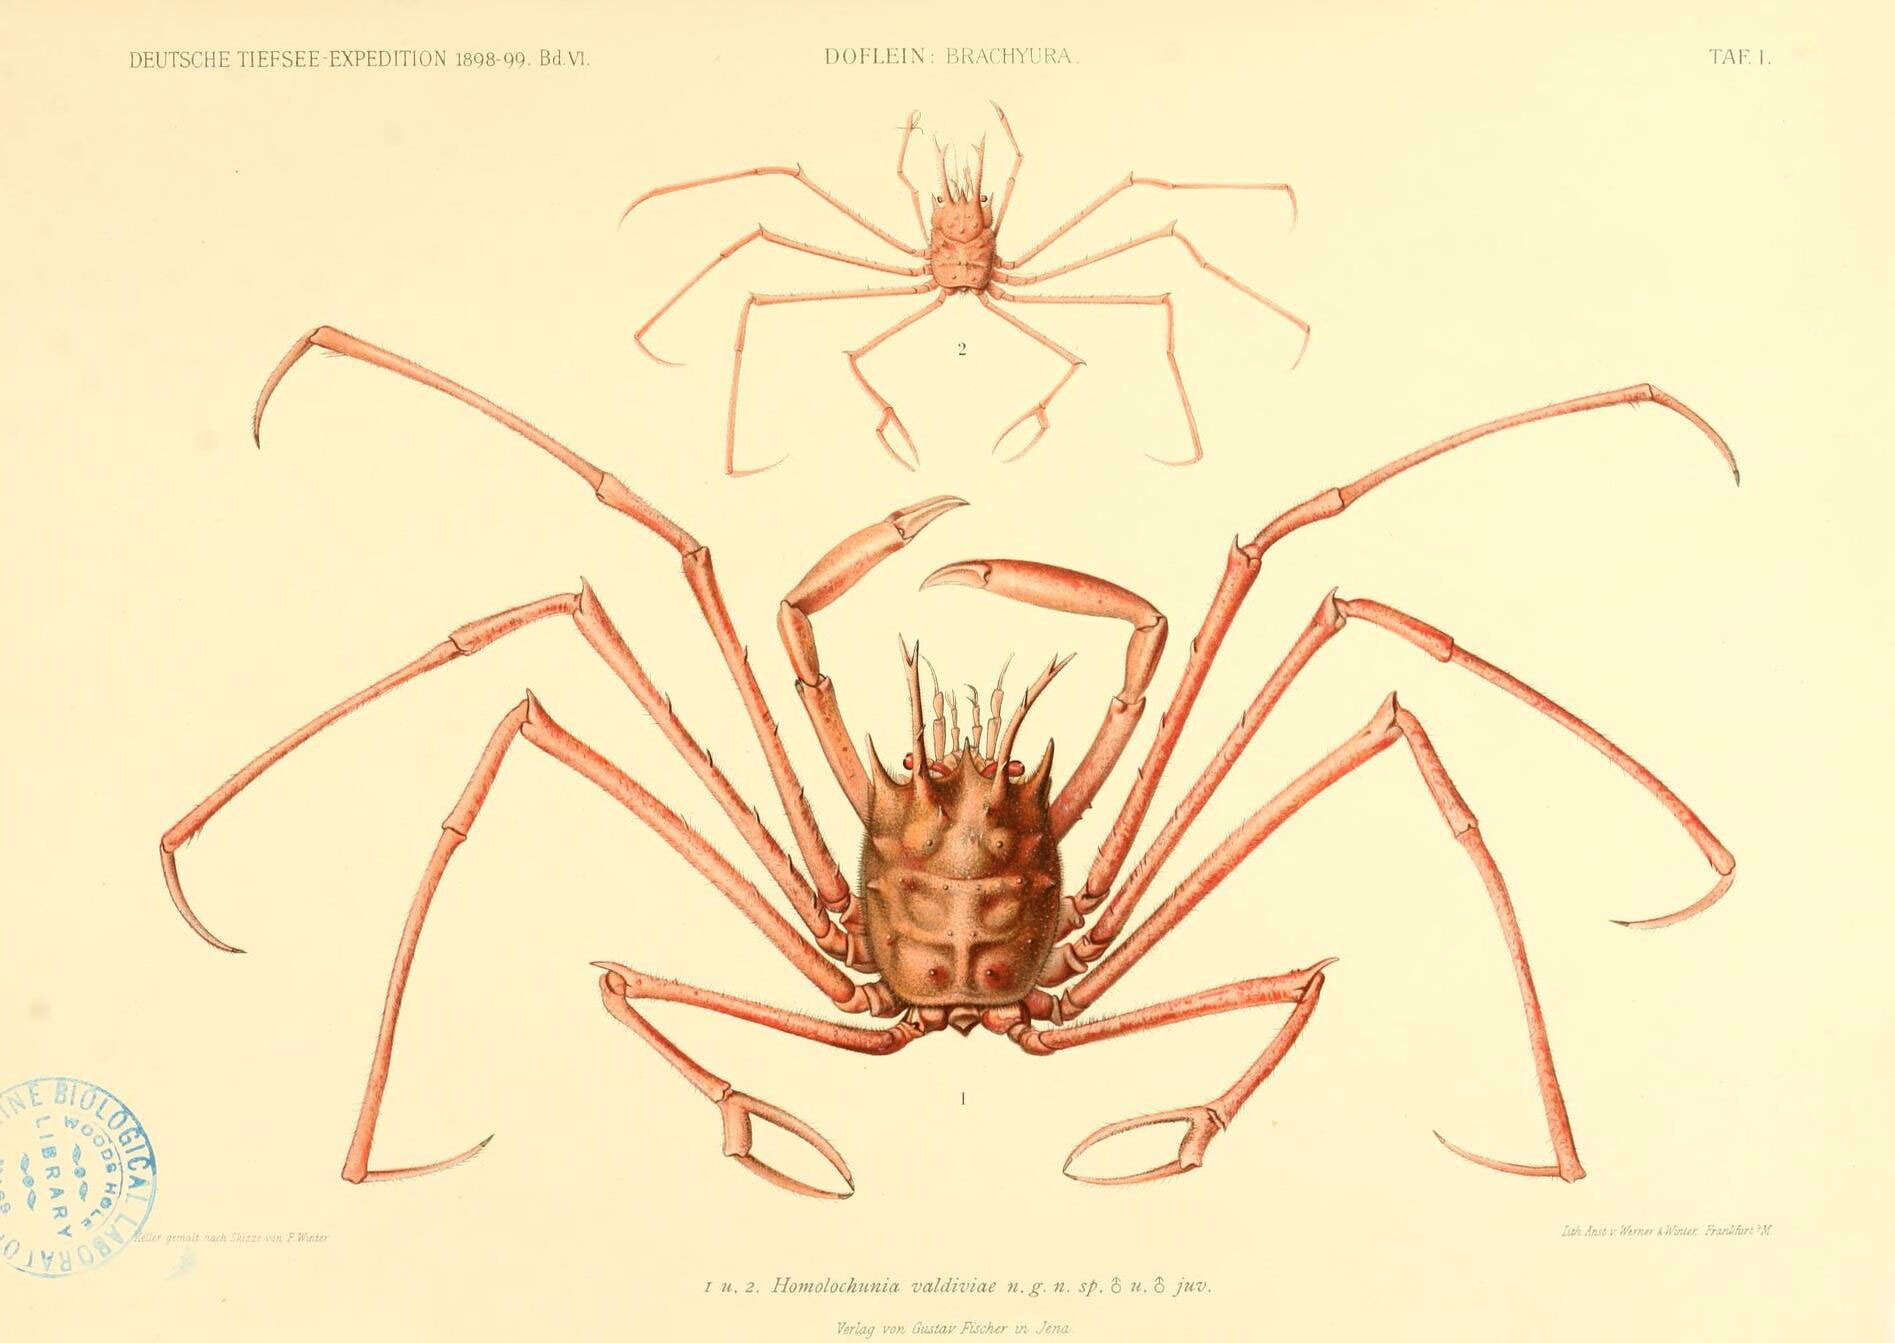 Image of Homolochunia Doflein 1904